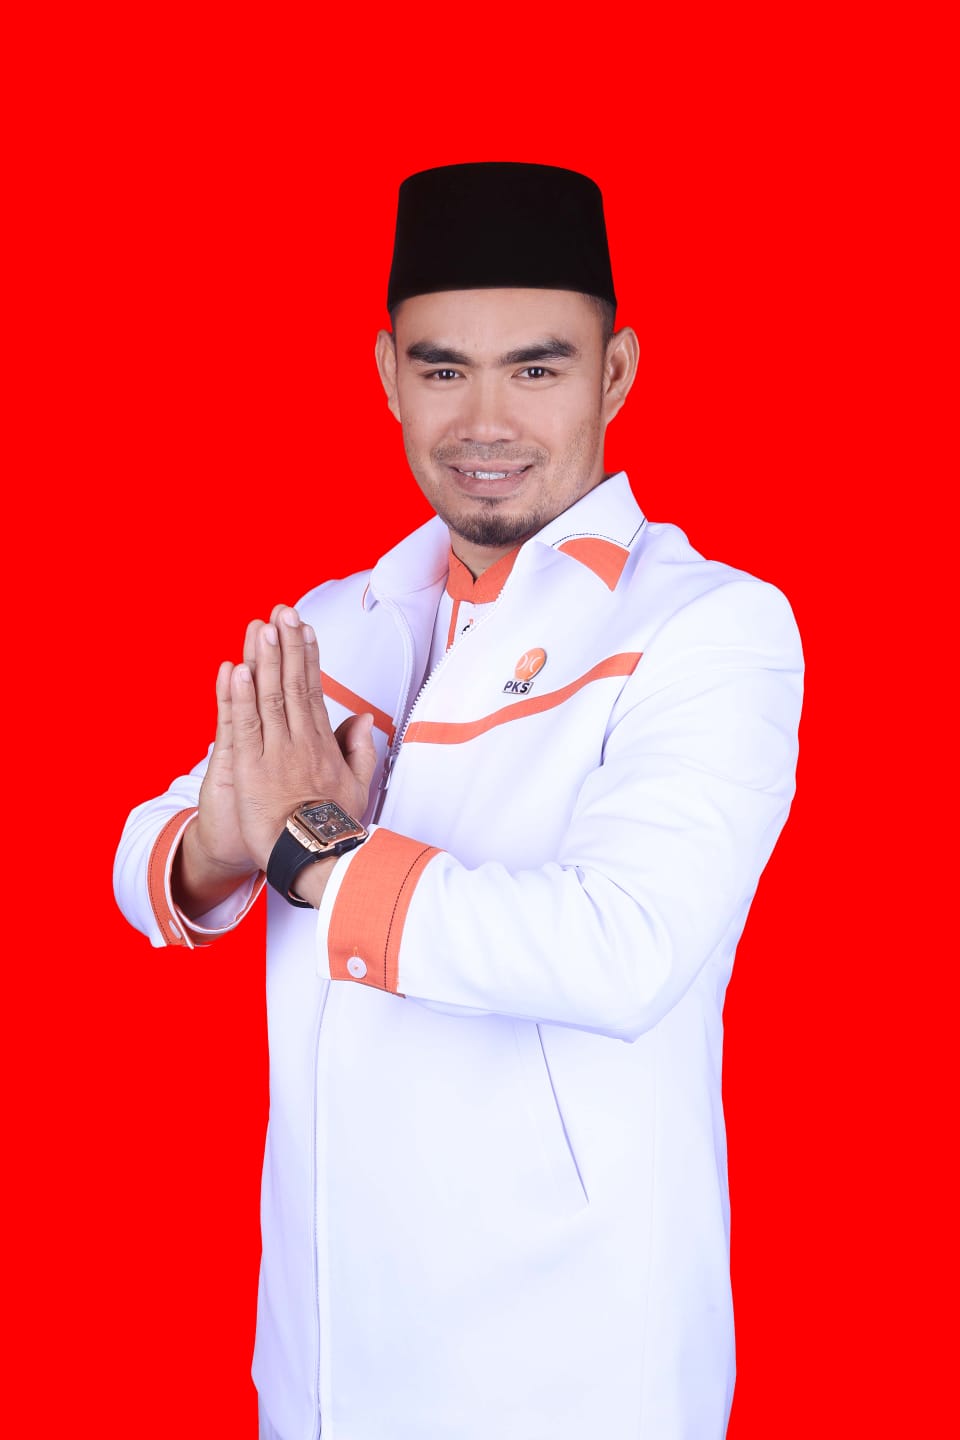 Abdul Fikrianto, Pembawa Semangat Baru di DPRD Provinsi Sumsel